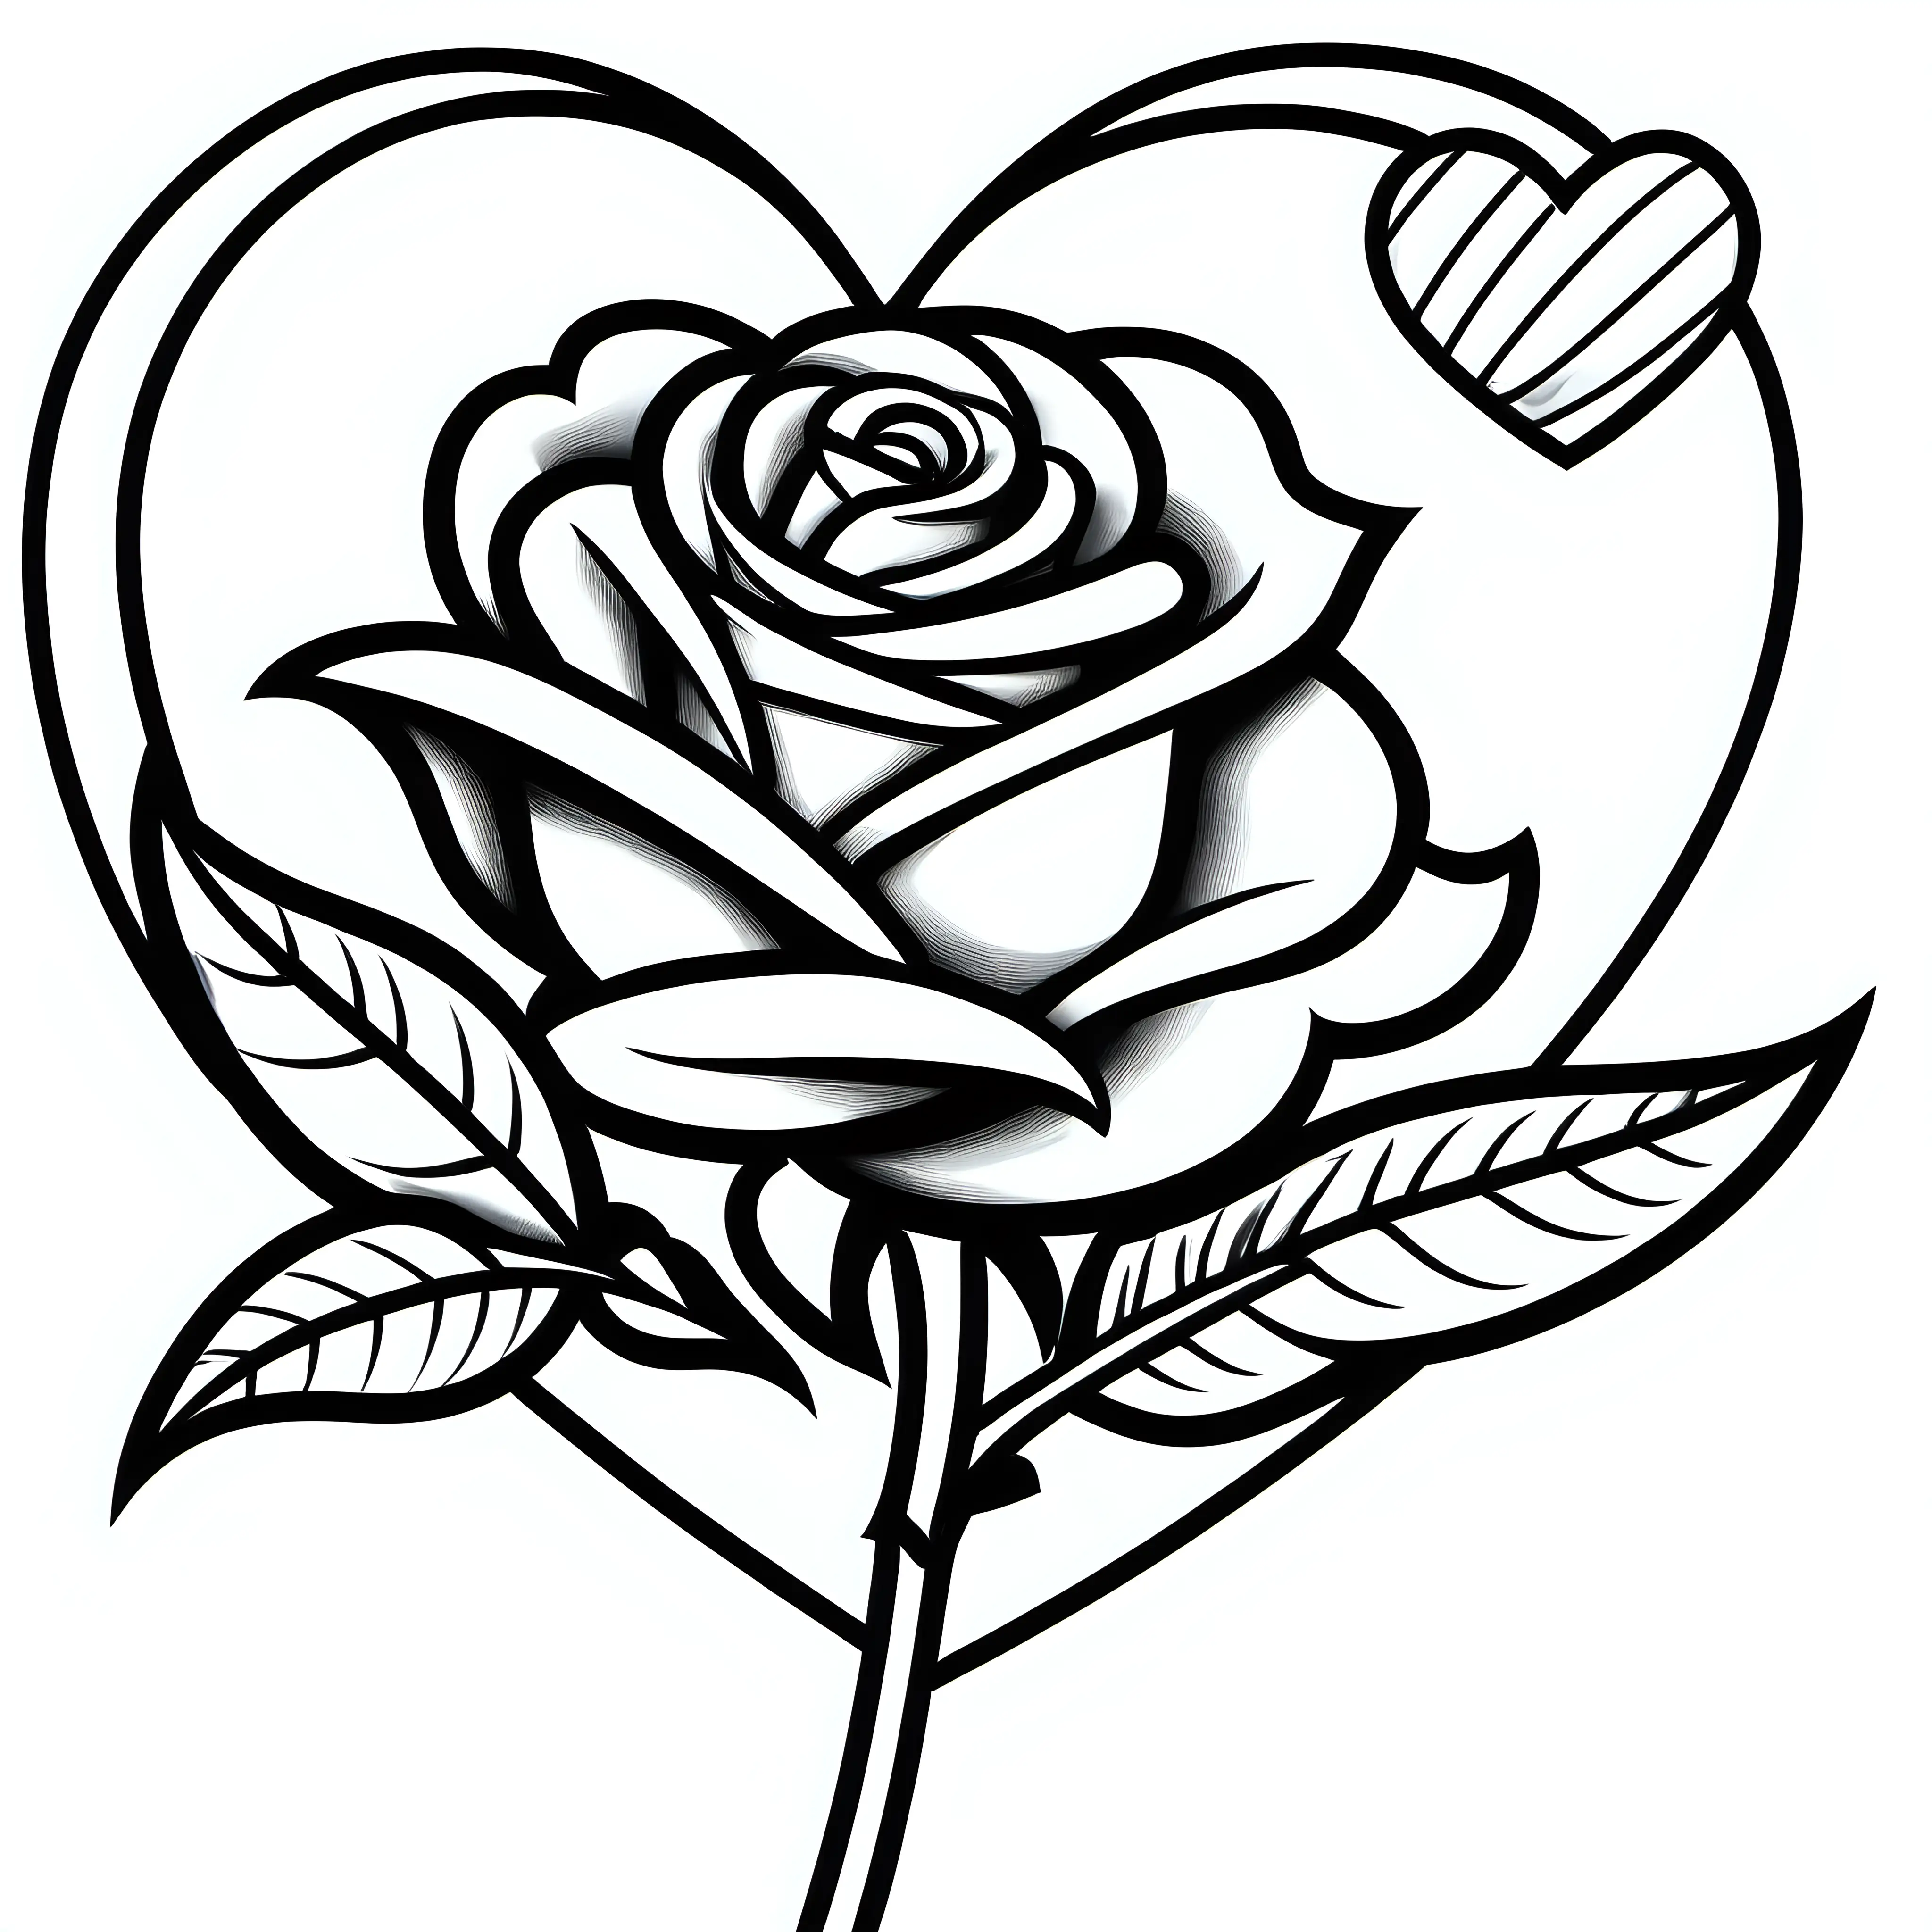 Happy Rose Day #rosedrawing #art #rose #drawing #artwork #roses #artist  #flowerdrawing #rosetattoo #sketch #pencildrawing #roseart #flow... |  Instagram